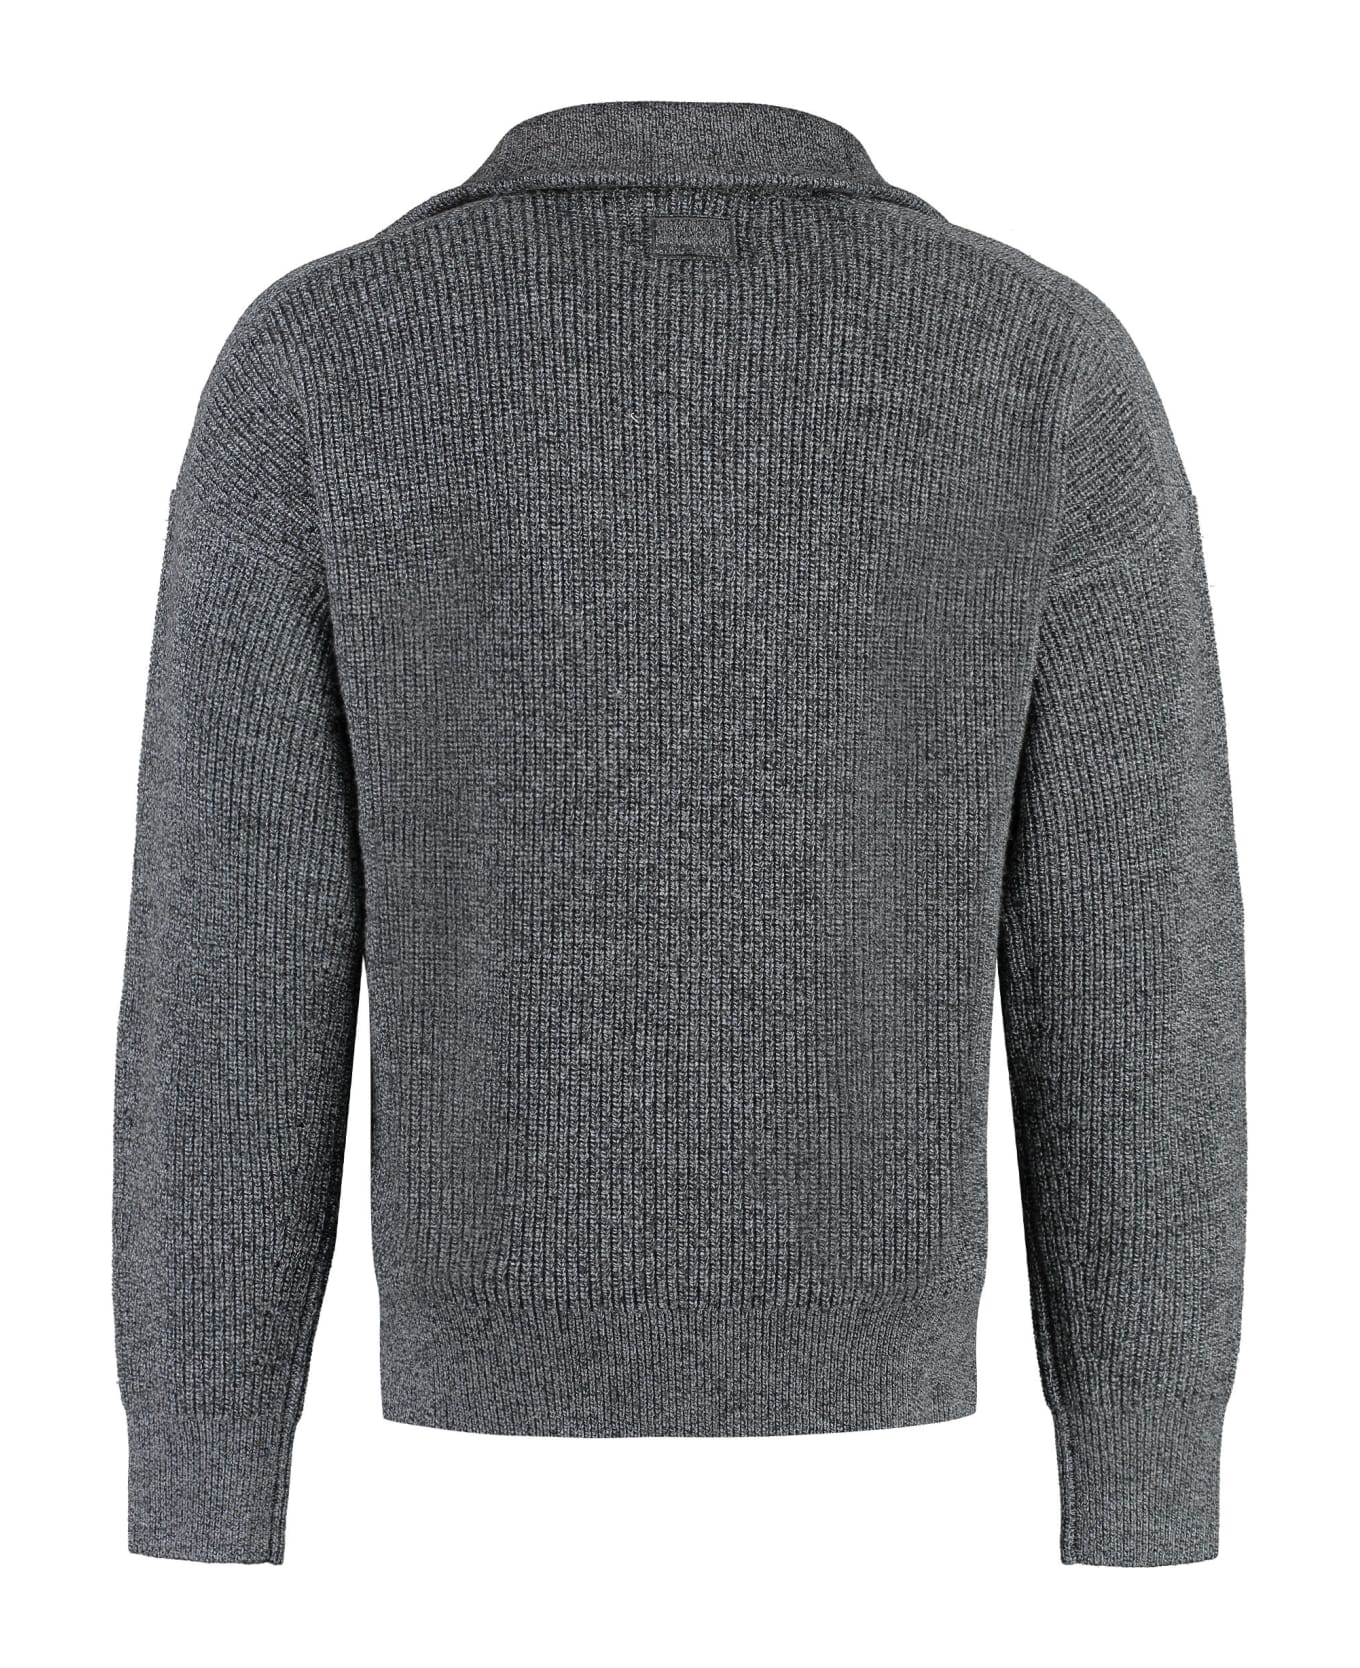 Isabel Marant Benny Wool Turtleneck Sweater - grey